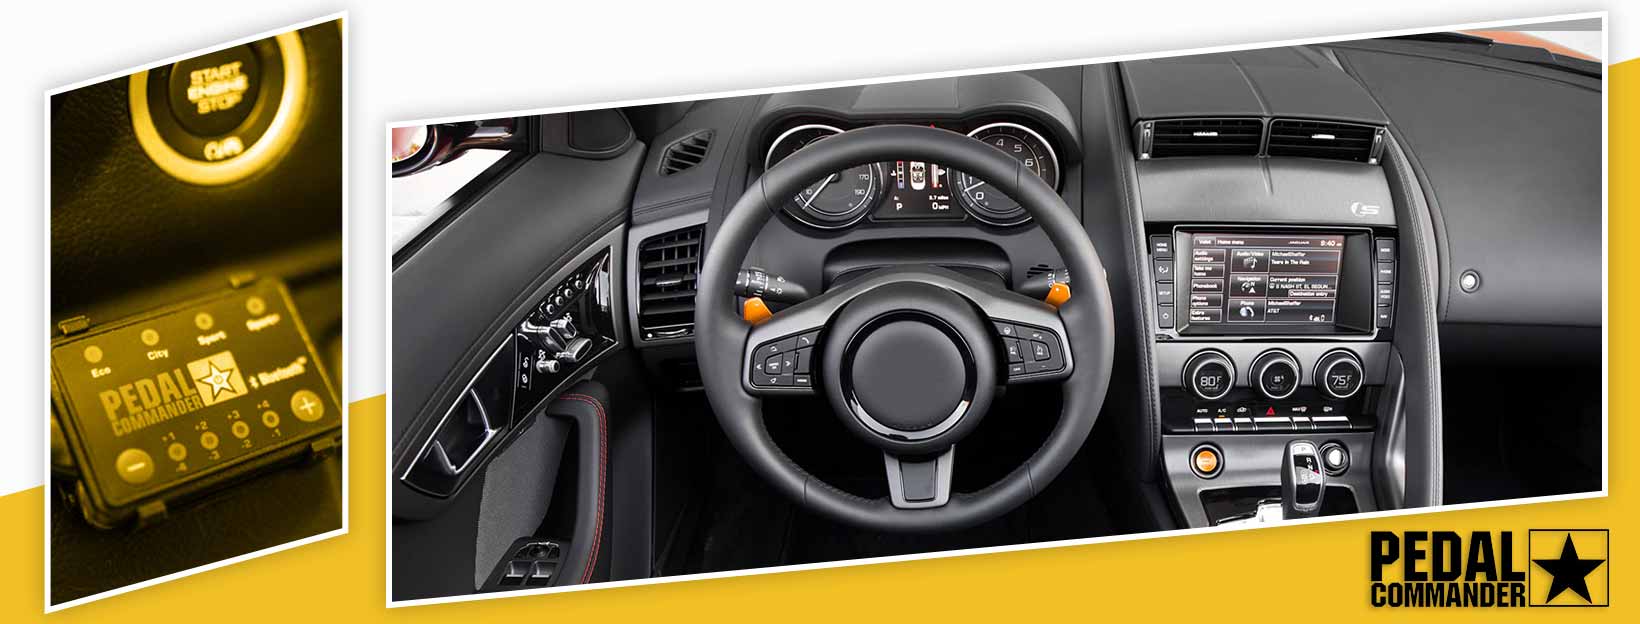 Pedal Commander for Jaguar F-Type - interior